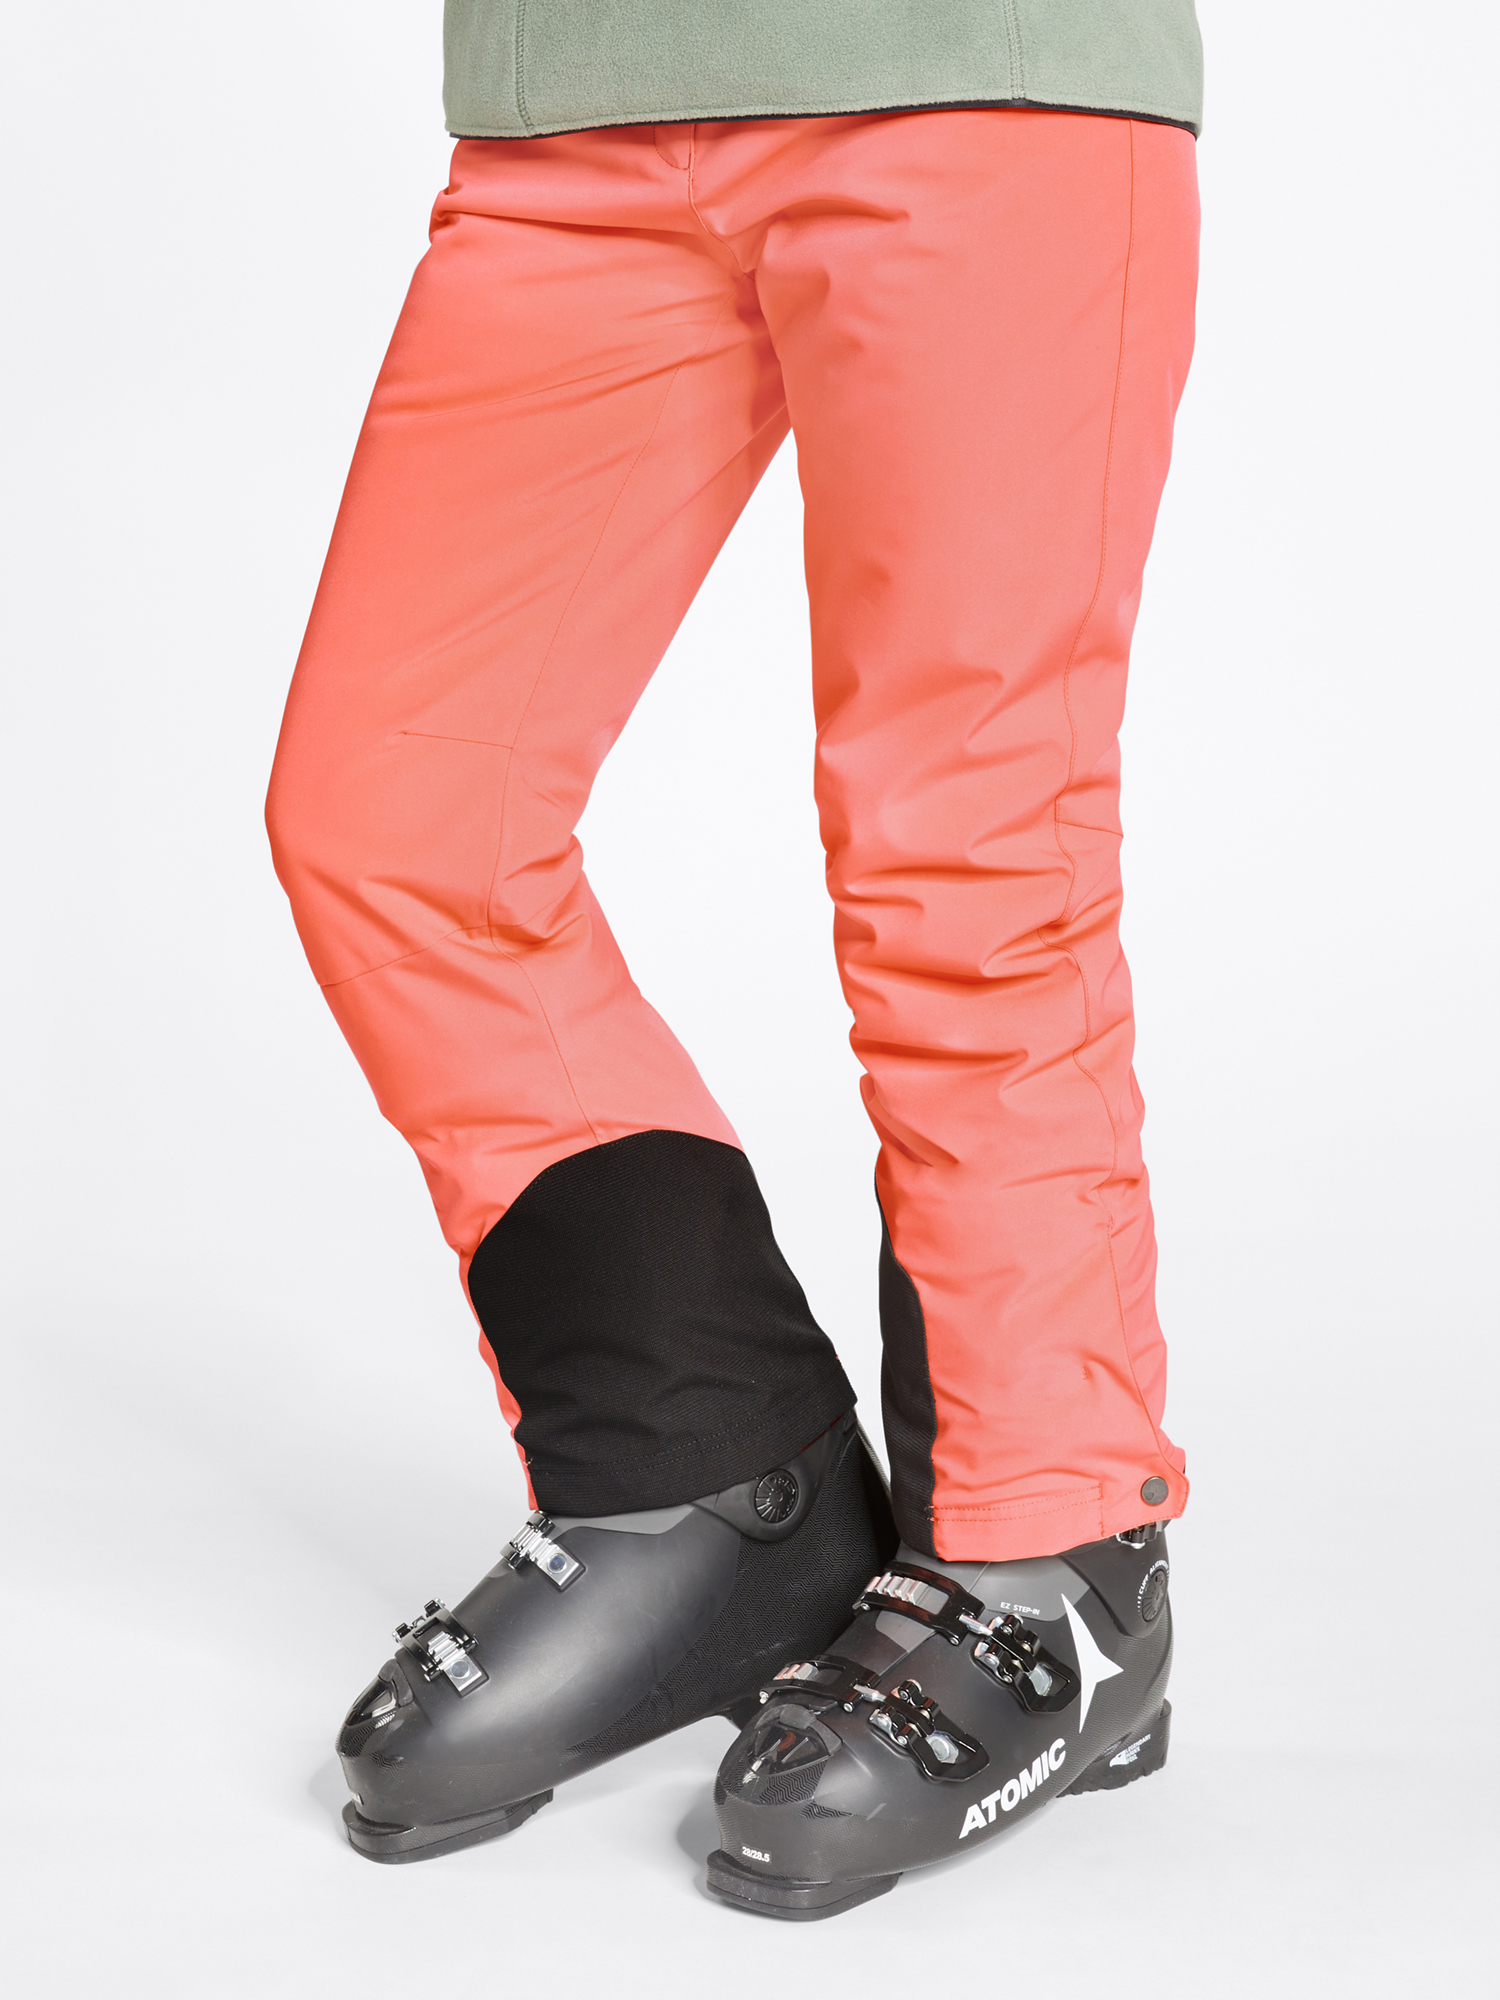 TILLA ZIENER online (pants peach ski) vibrant kaufen lady